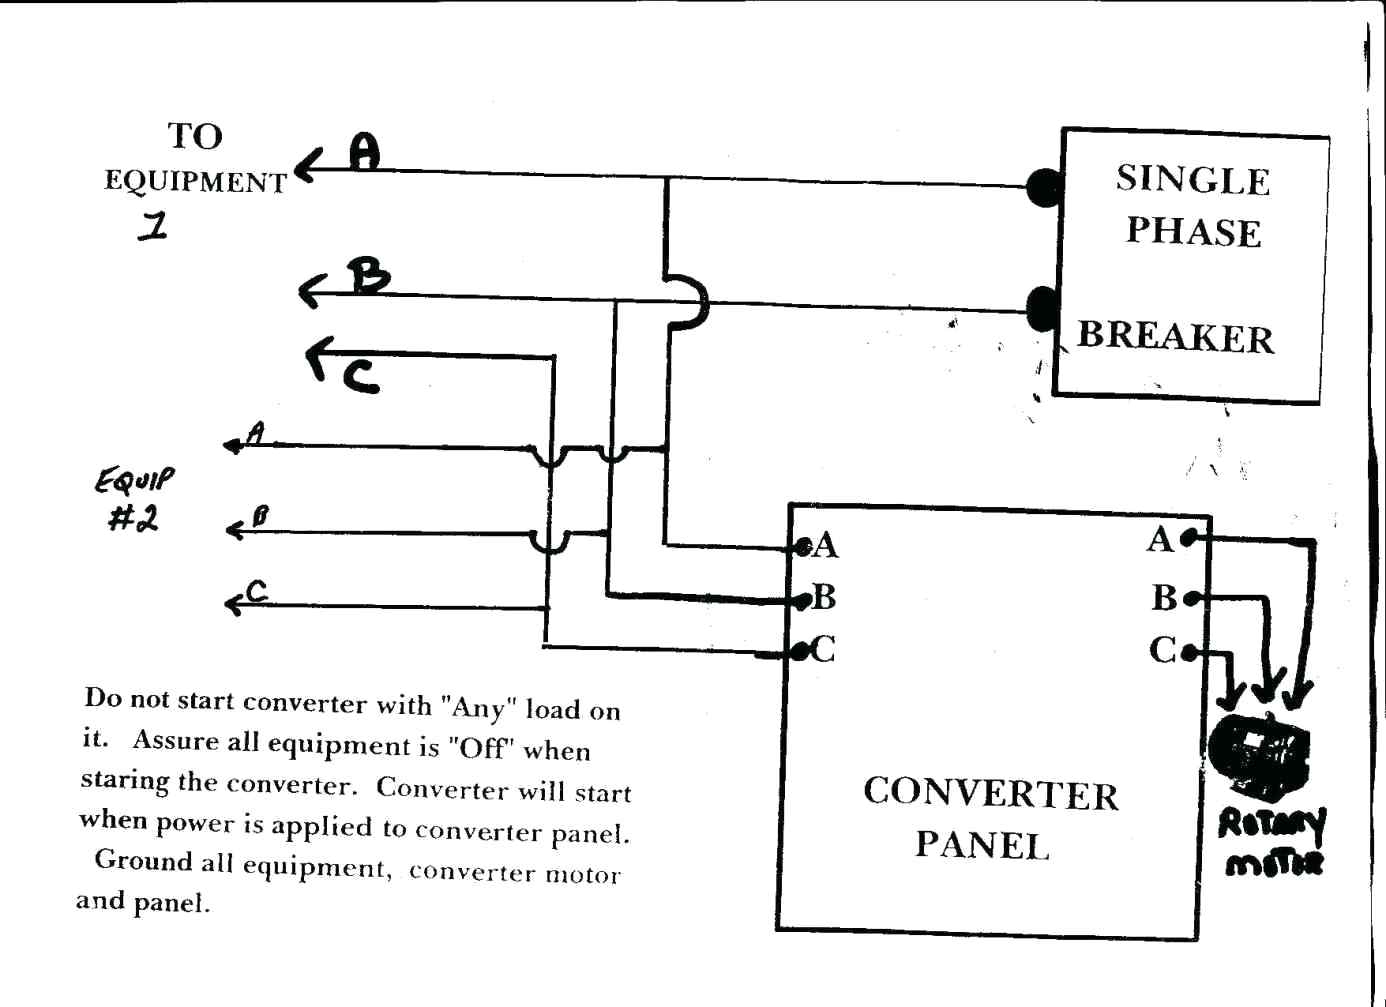 Square D Shunt Trip Breaker Wiring Diagram - Allove - Shunt Trip Breaker Wiring Diagram